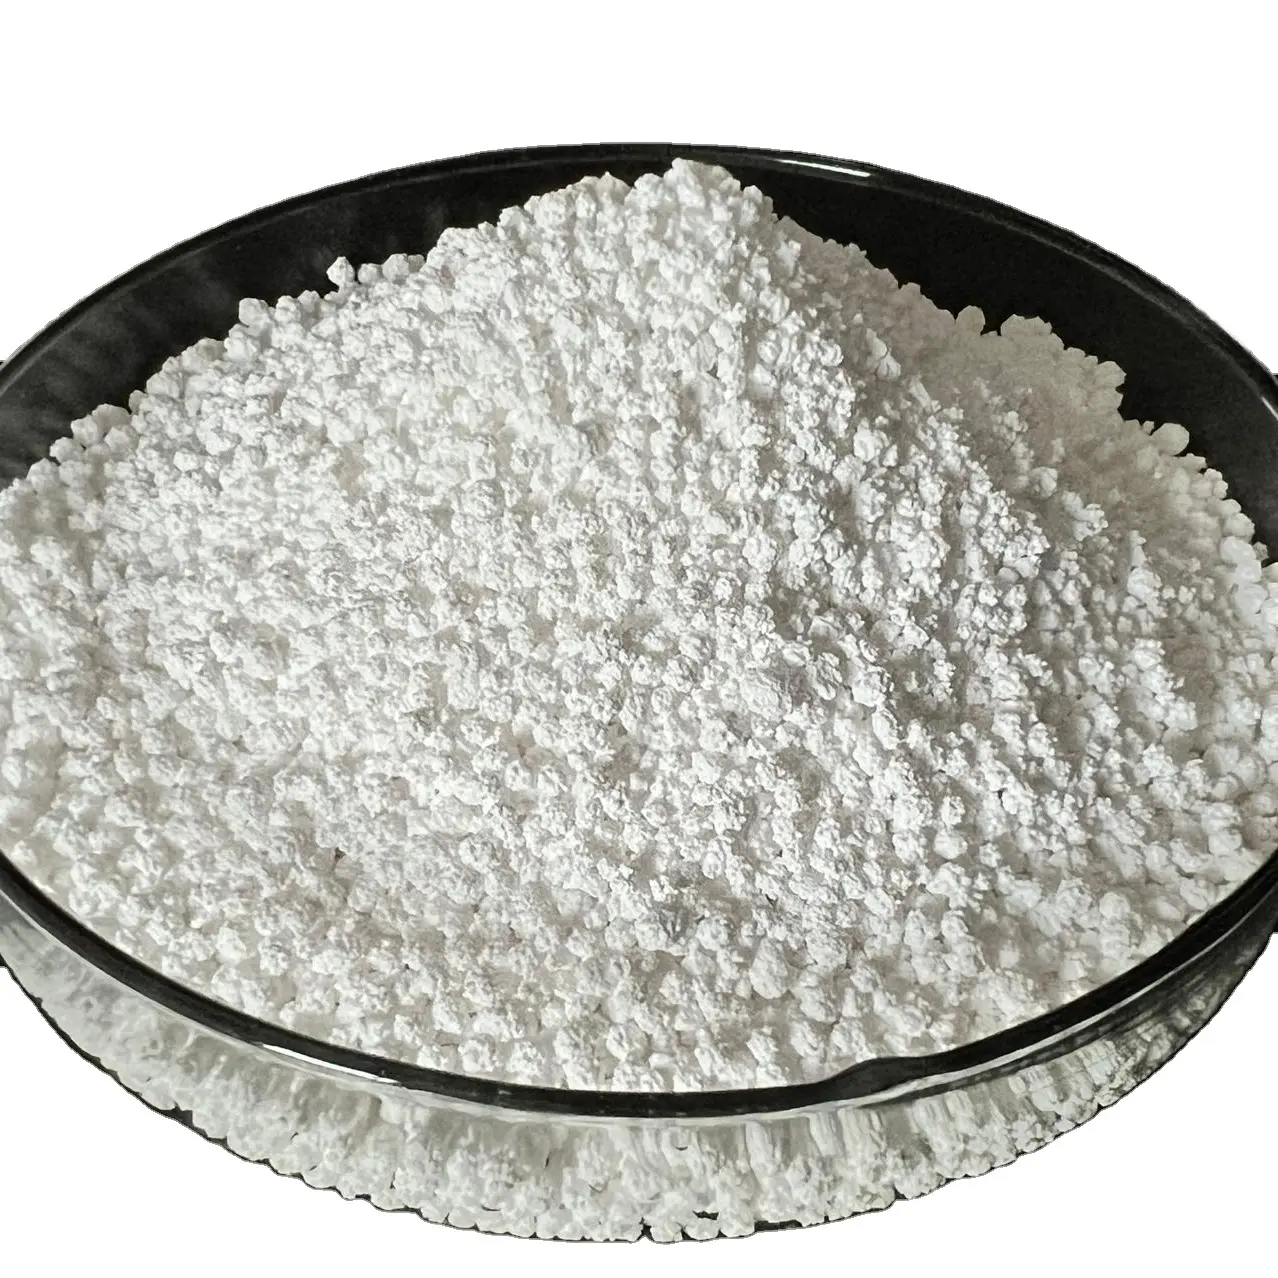 आईएसओ फैक्ट्री हॉट सेल शीर्ष गुणवत्ता 74% फ्लेक 74% पेलेट 95% पाउडर औद्योगिक ग्रेड क्लोराइड कैल्शियम क्लोराइड खाद्य ग्रेड Cacl2